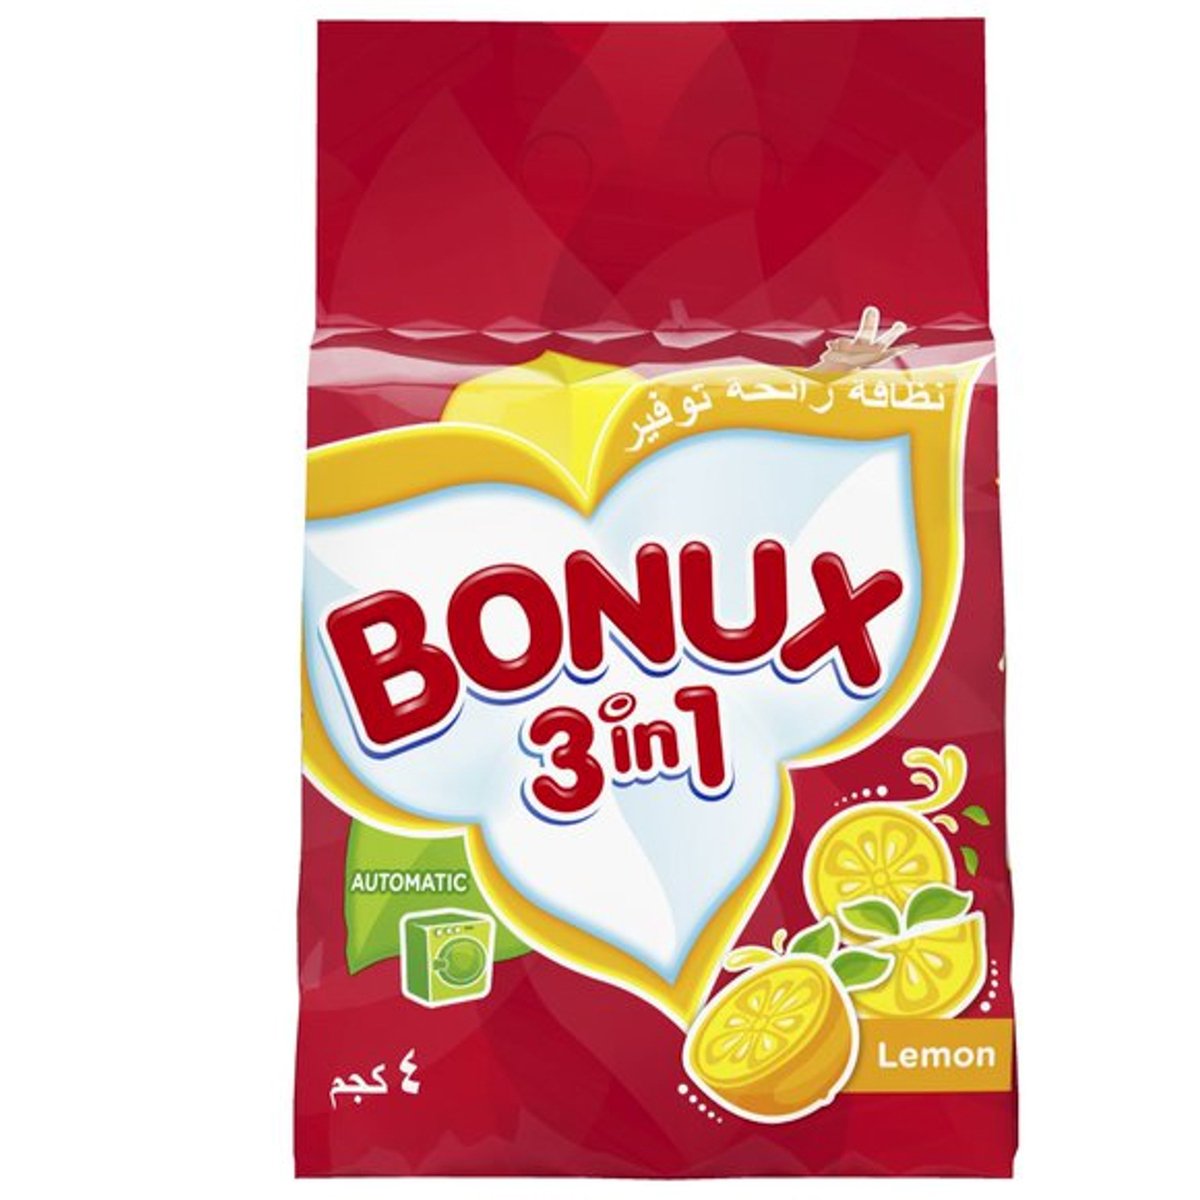 Bonux 3 in 1 Automatic Washing Powder Lemon 4kg